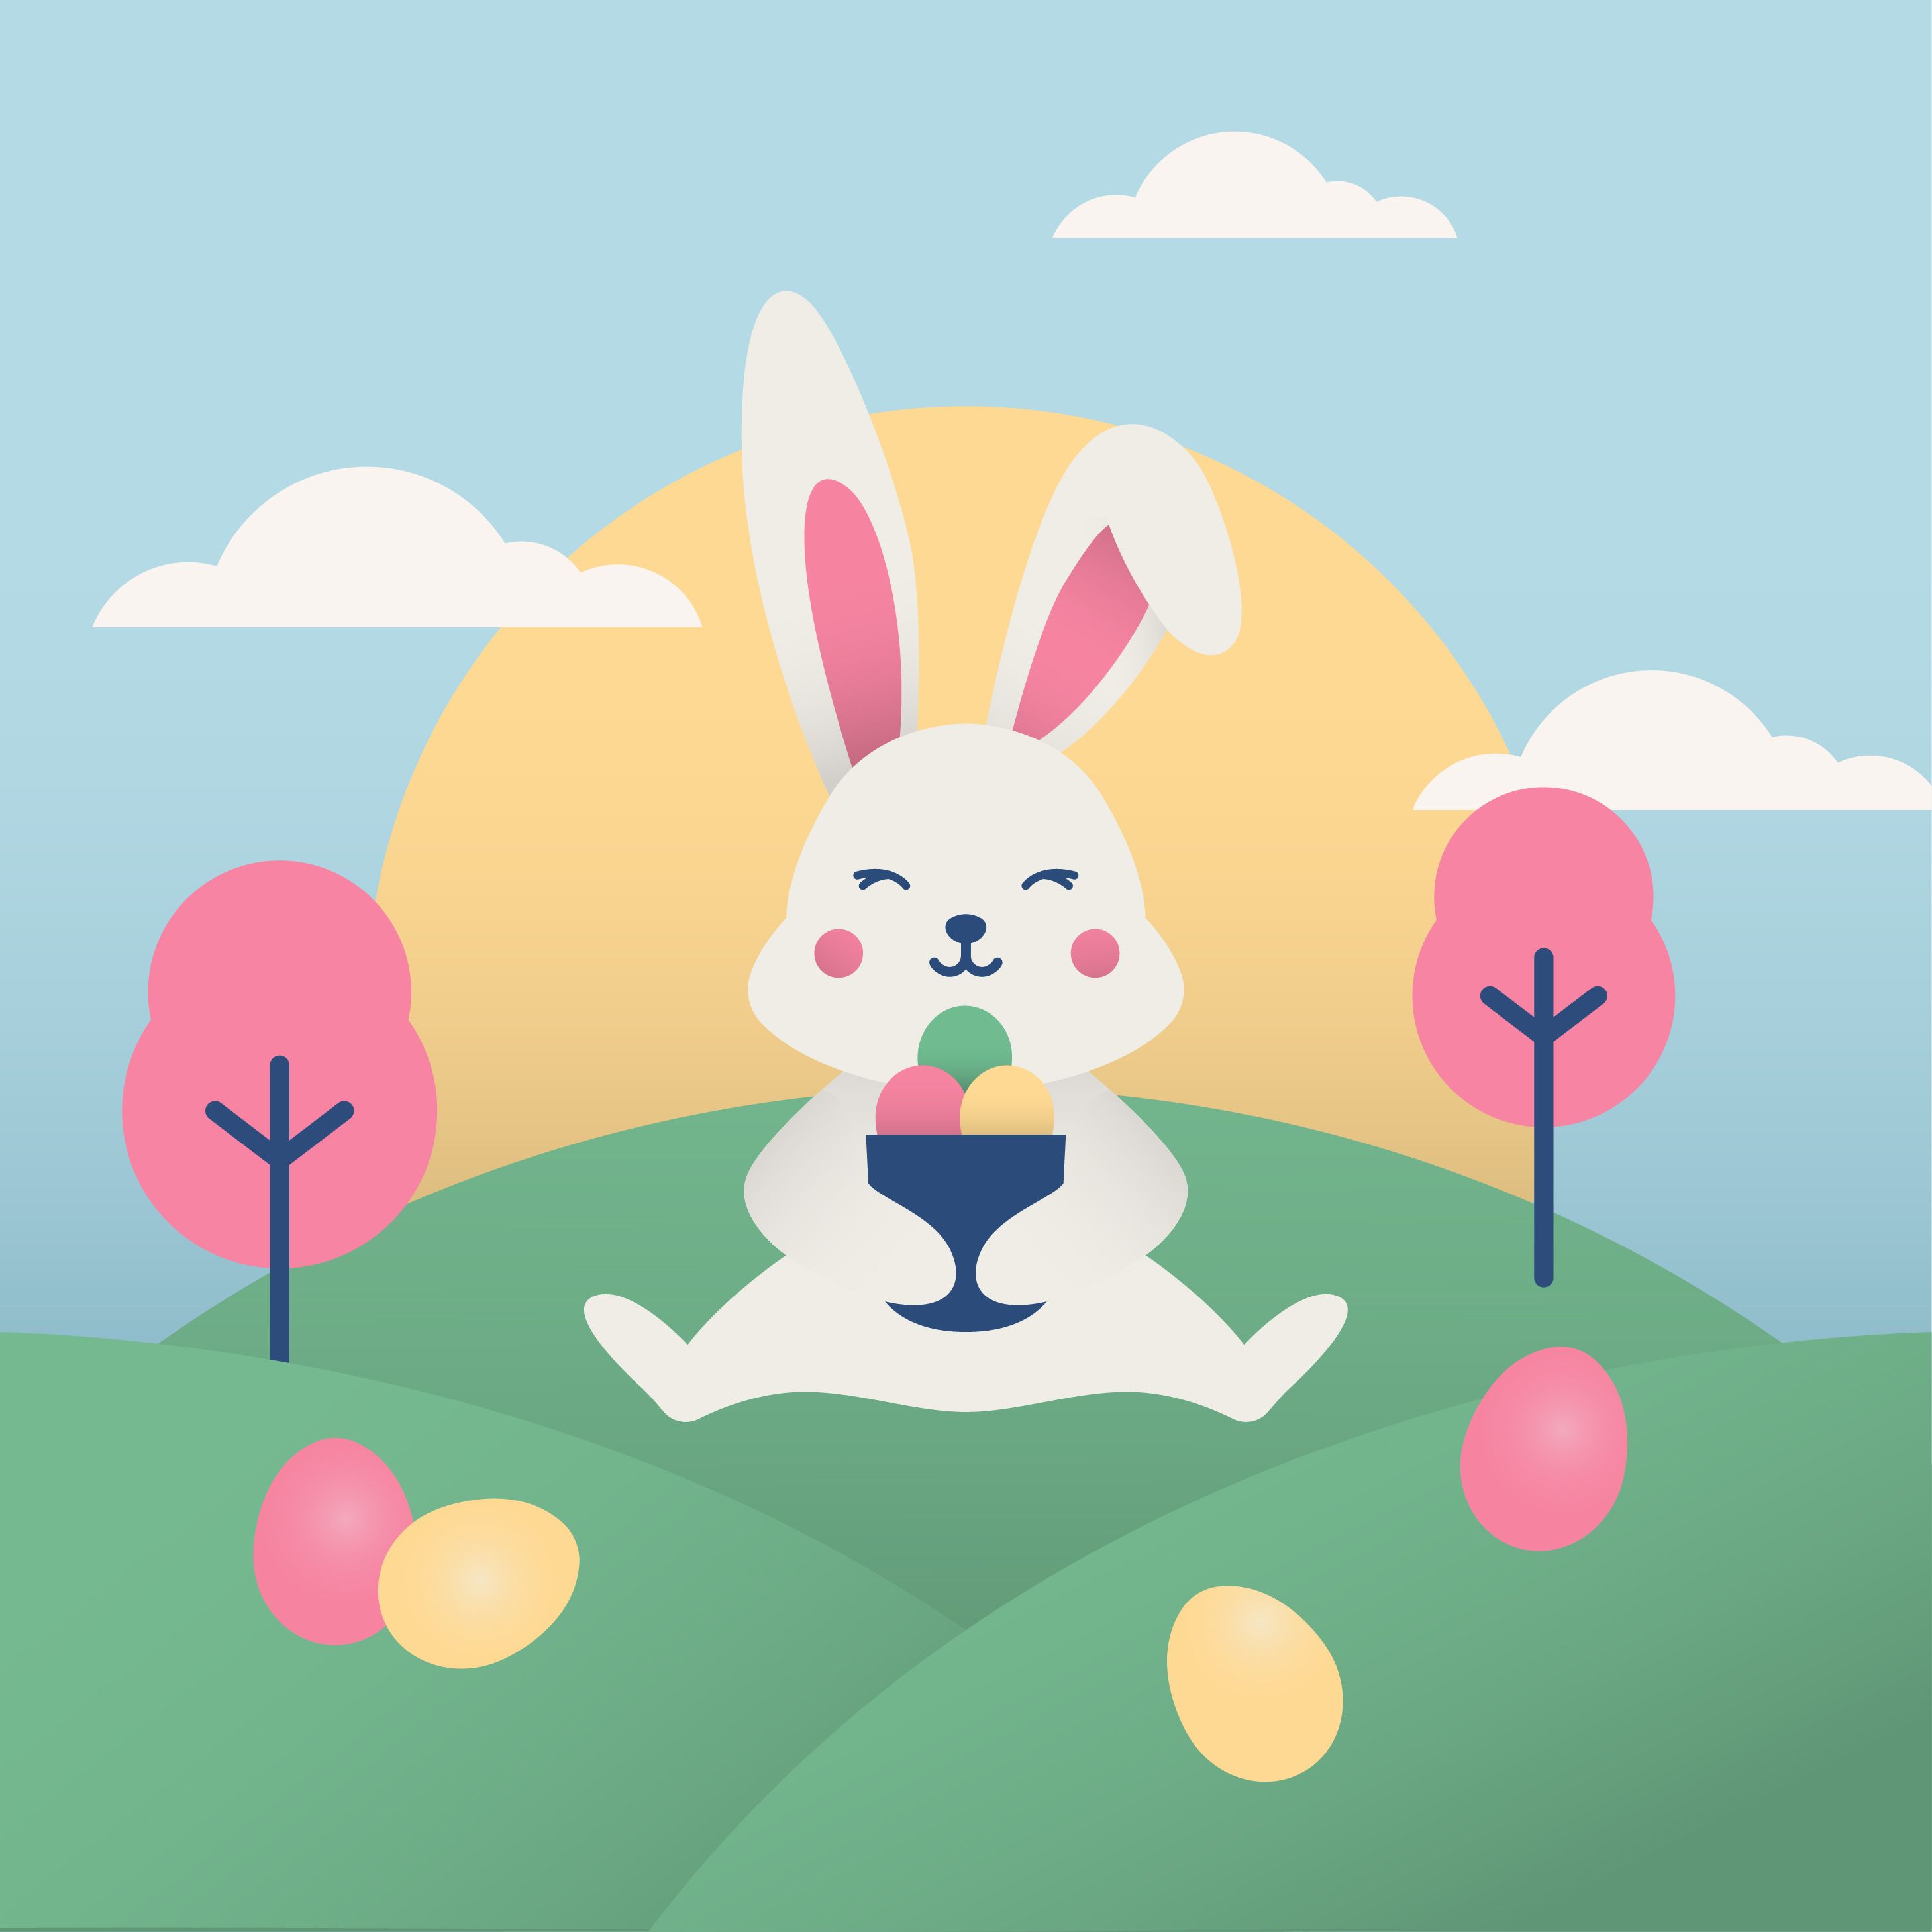 Easter Wallpaper with Cute Rabbit 275288 Free Vectors, Clipart Graphics & Vector Art